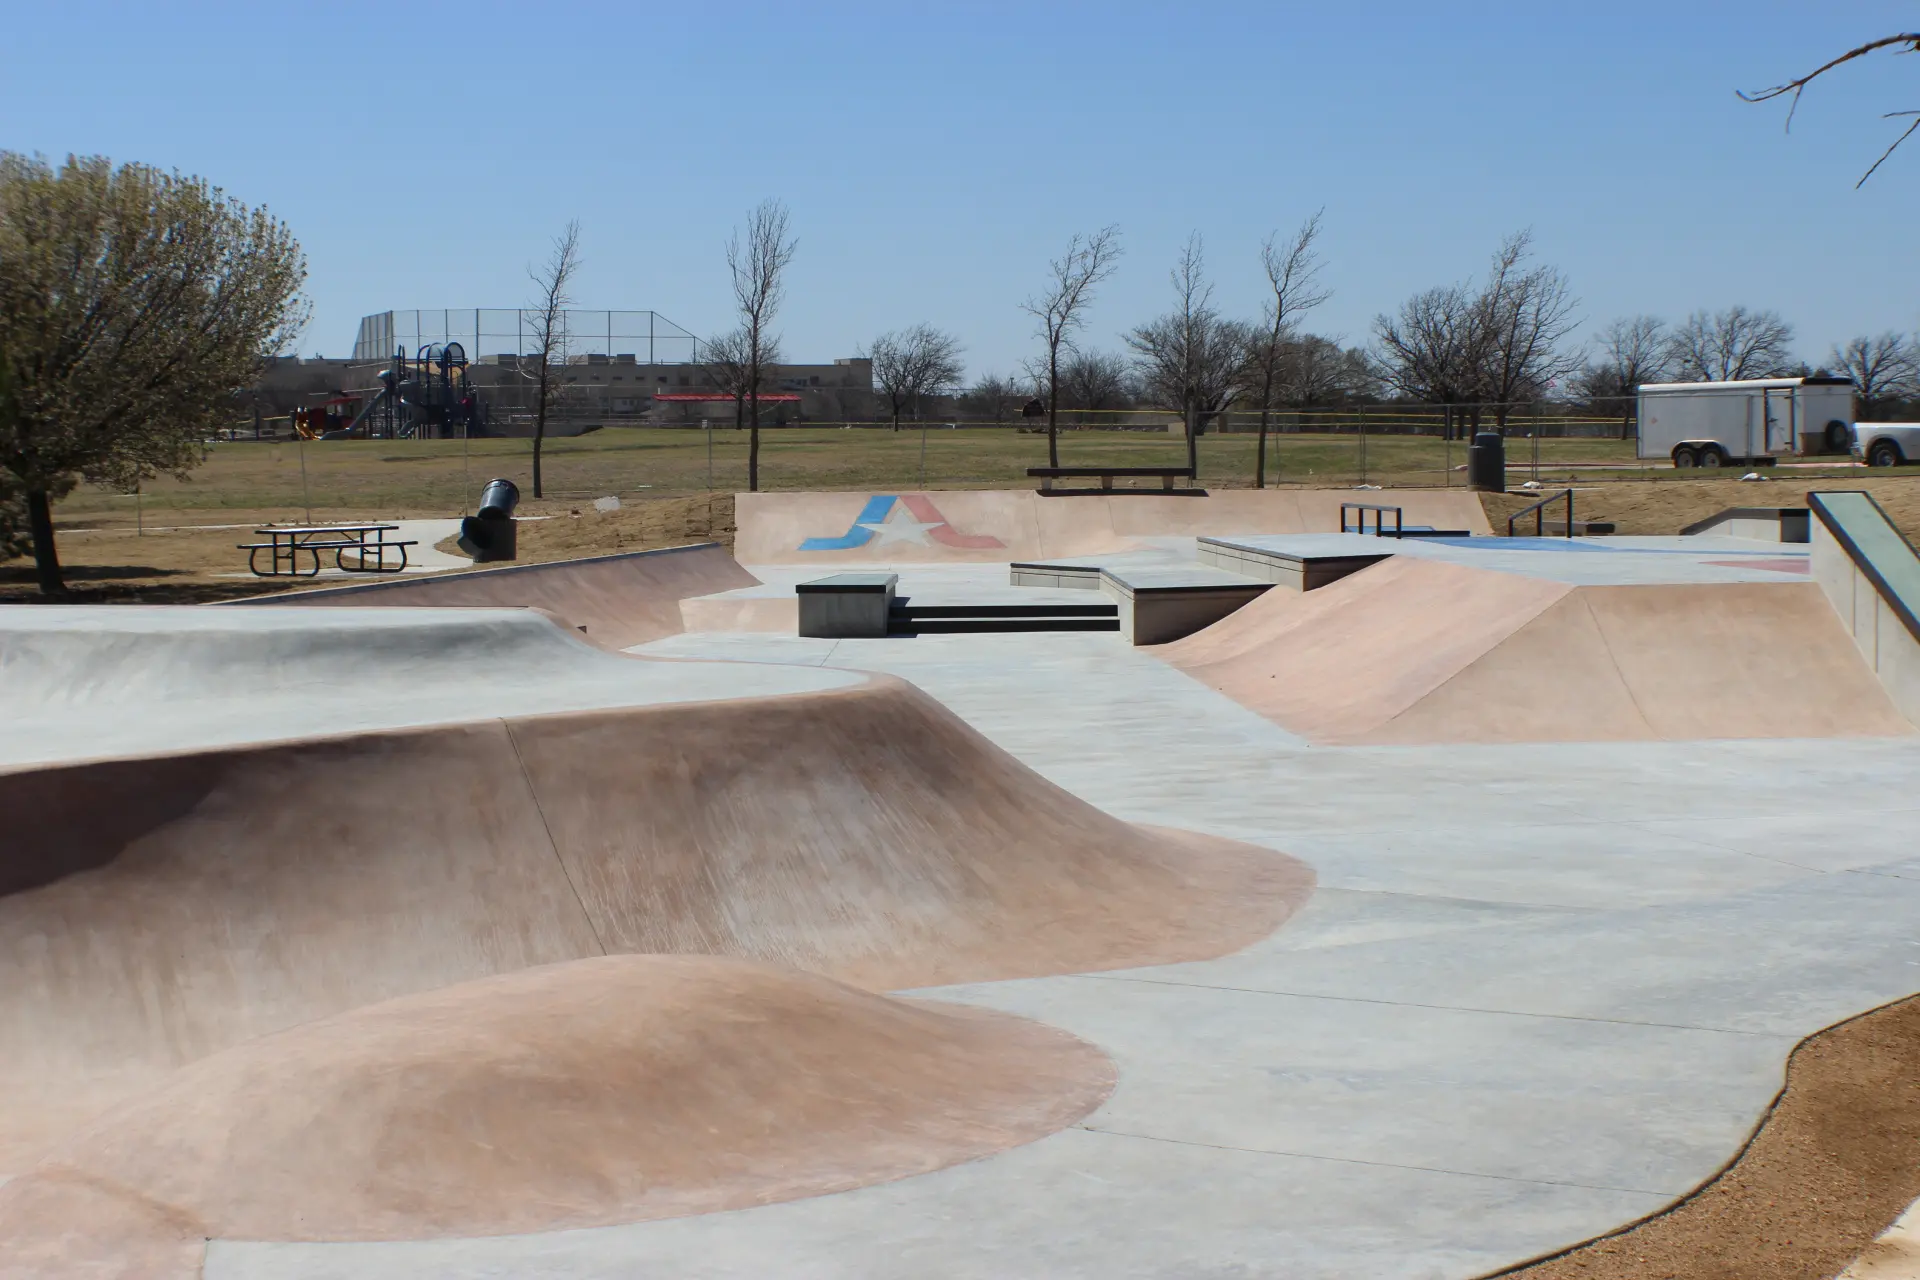 City of Arlington Vandergriff Skate Park